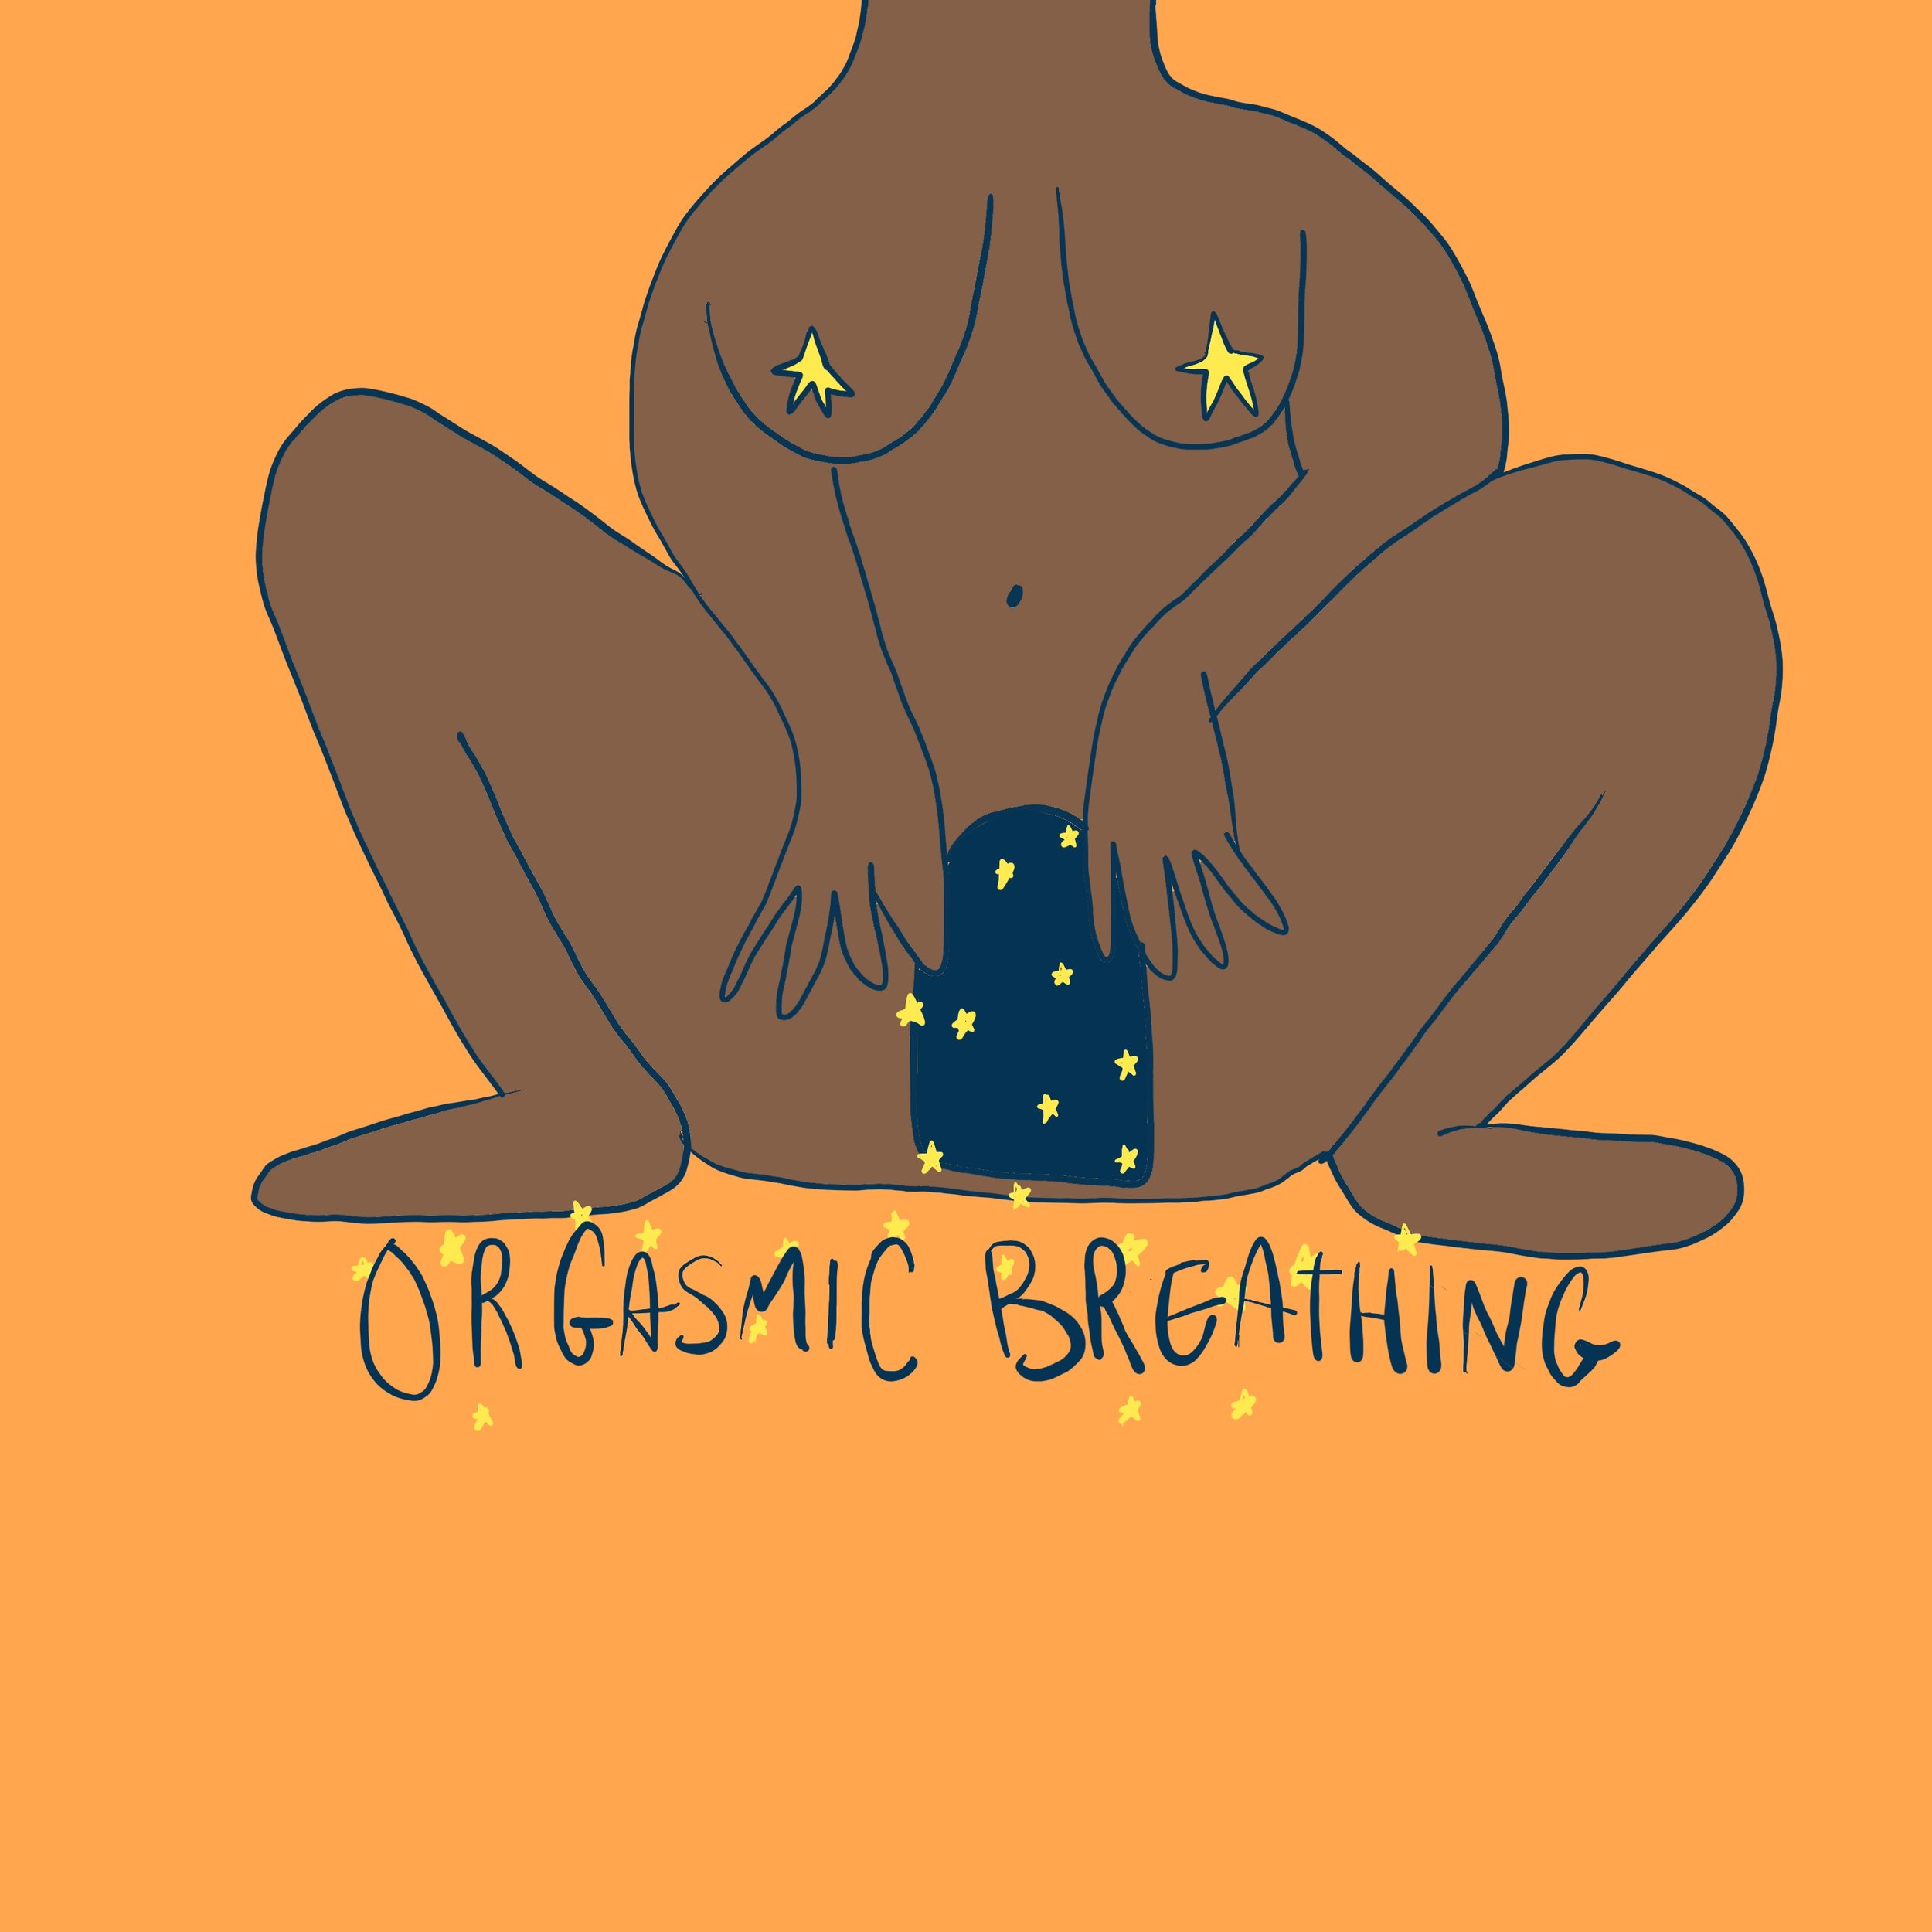 Orgasmic Breathing — The Sex Ed image